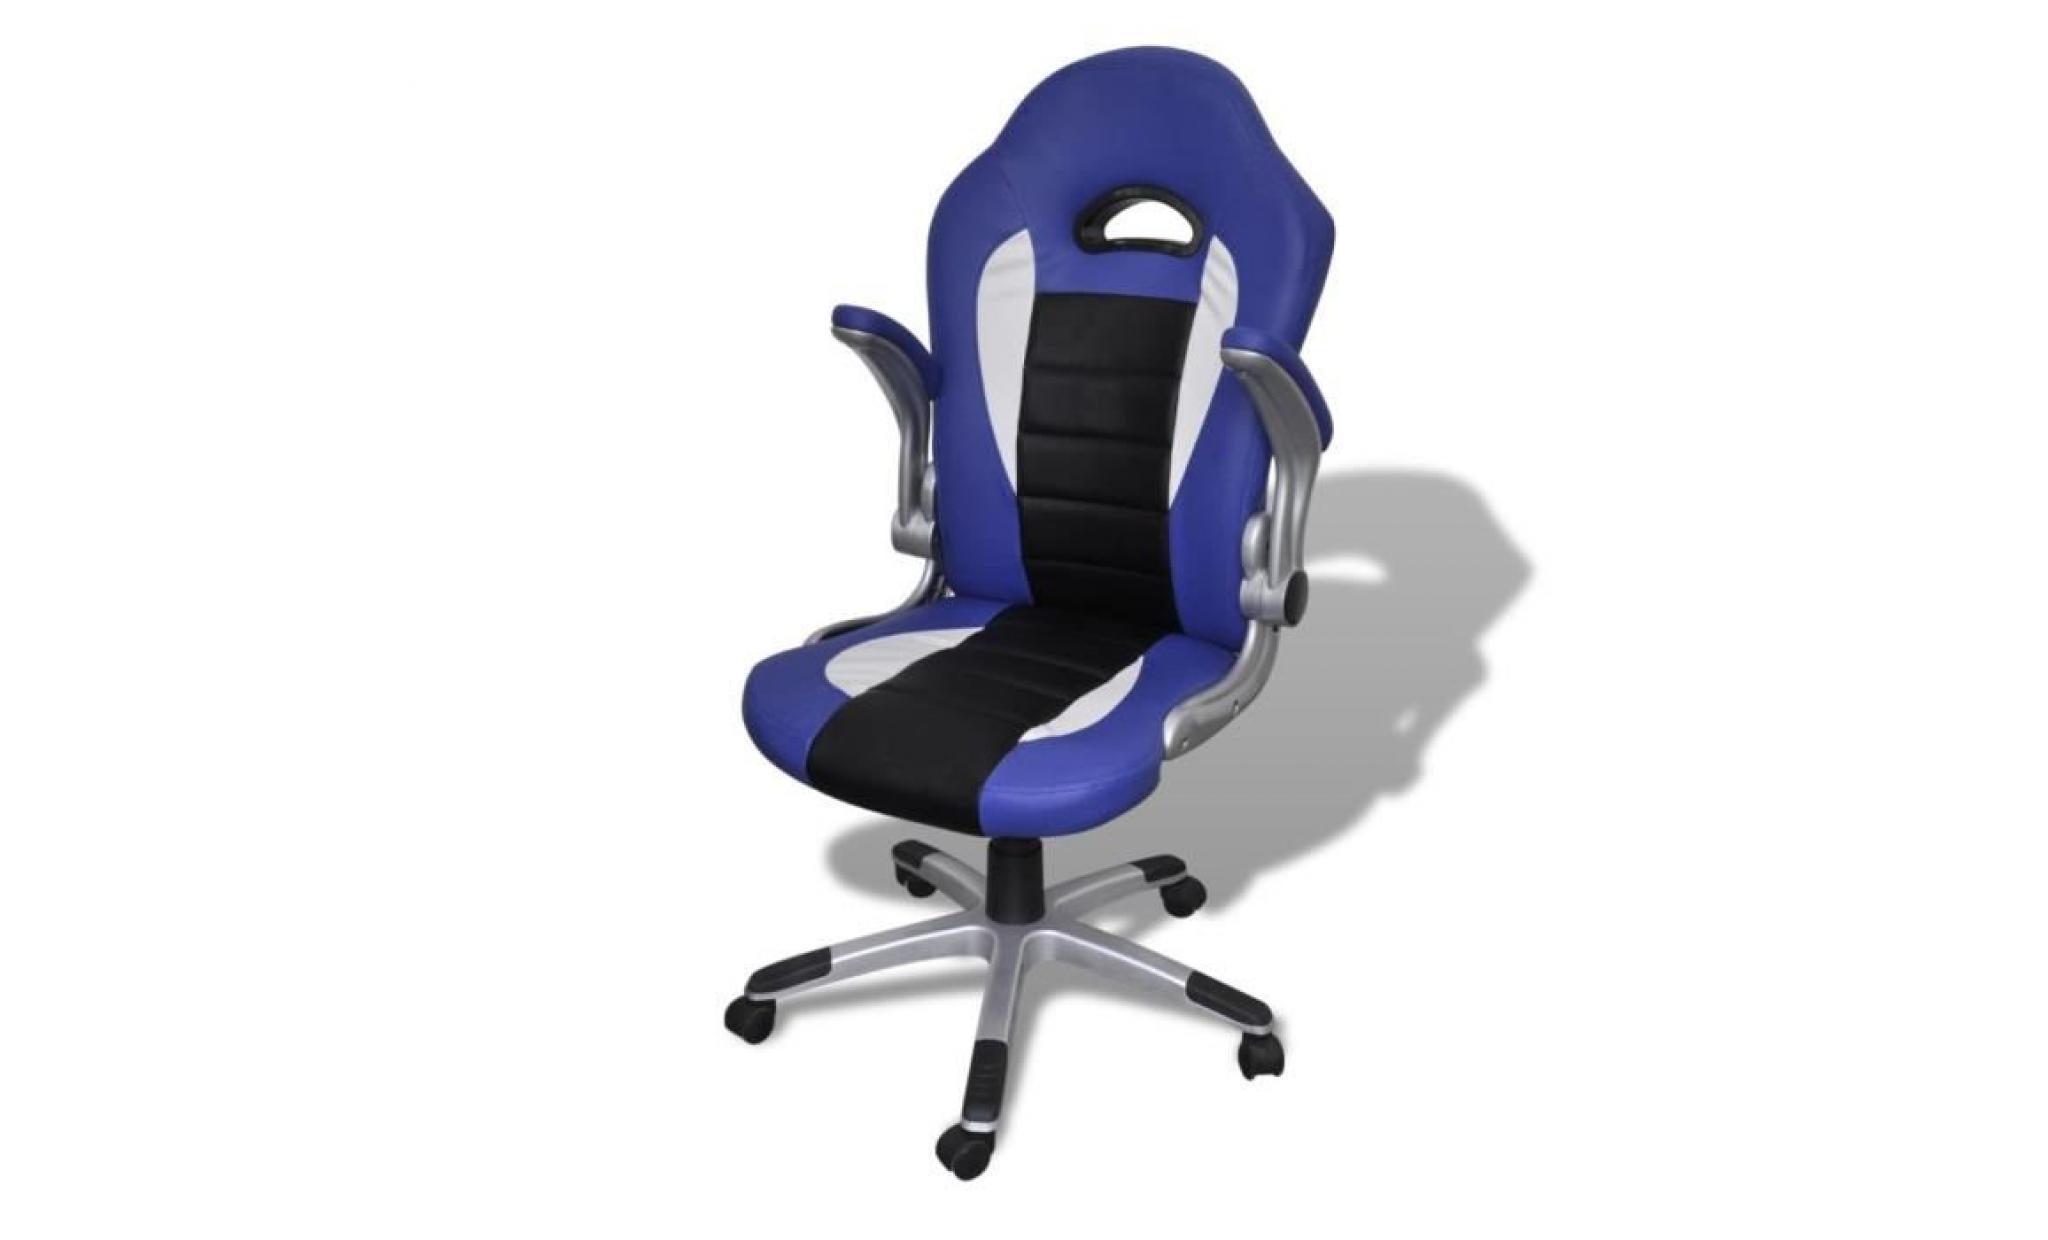 fauteuil de bureau bleu design moderne fauteuil de bureau fauteuil gamer pas cher